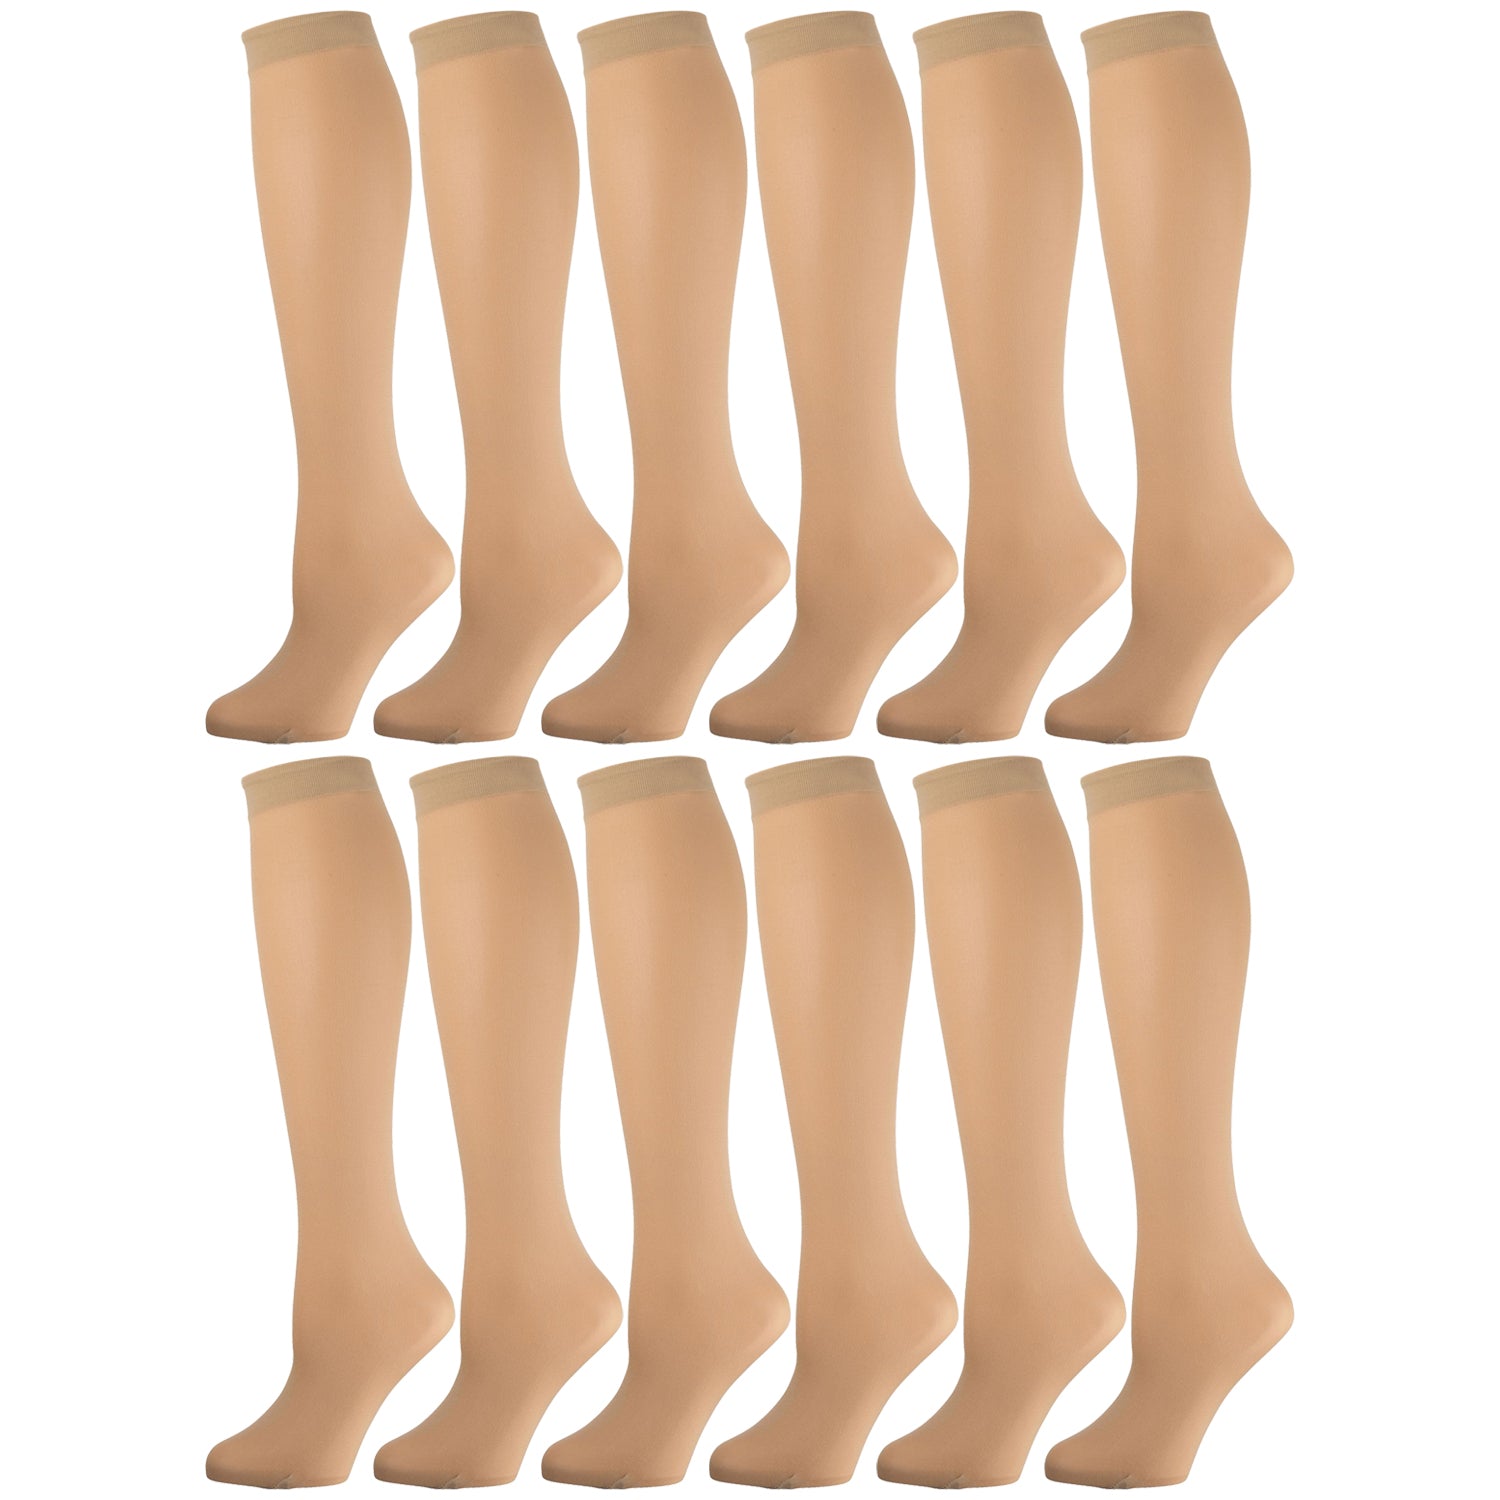 Women'S Opaque Trouser Socks Beige 12 Pairs